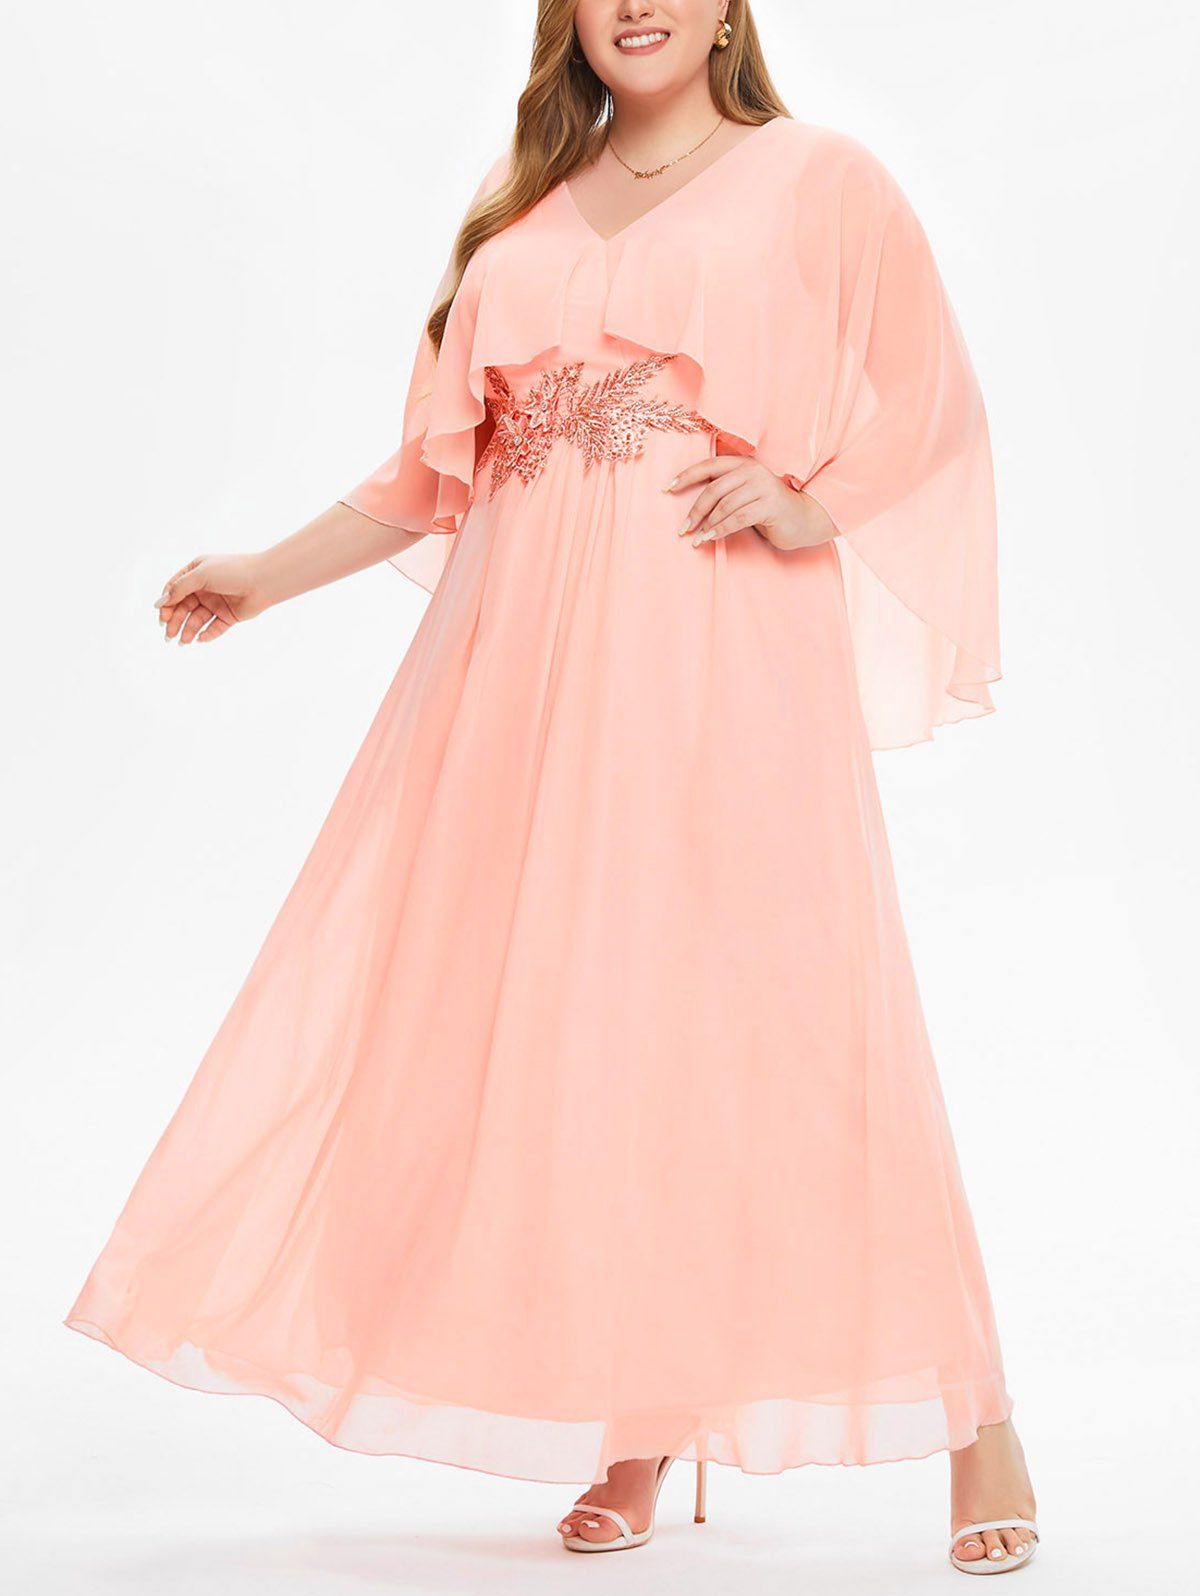 Plus Size Dress Chiffon Dress Ruffle Flower Embellishment Elegant A Line Maxi Party Dress - LIGHT PINK 2XL